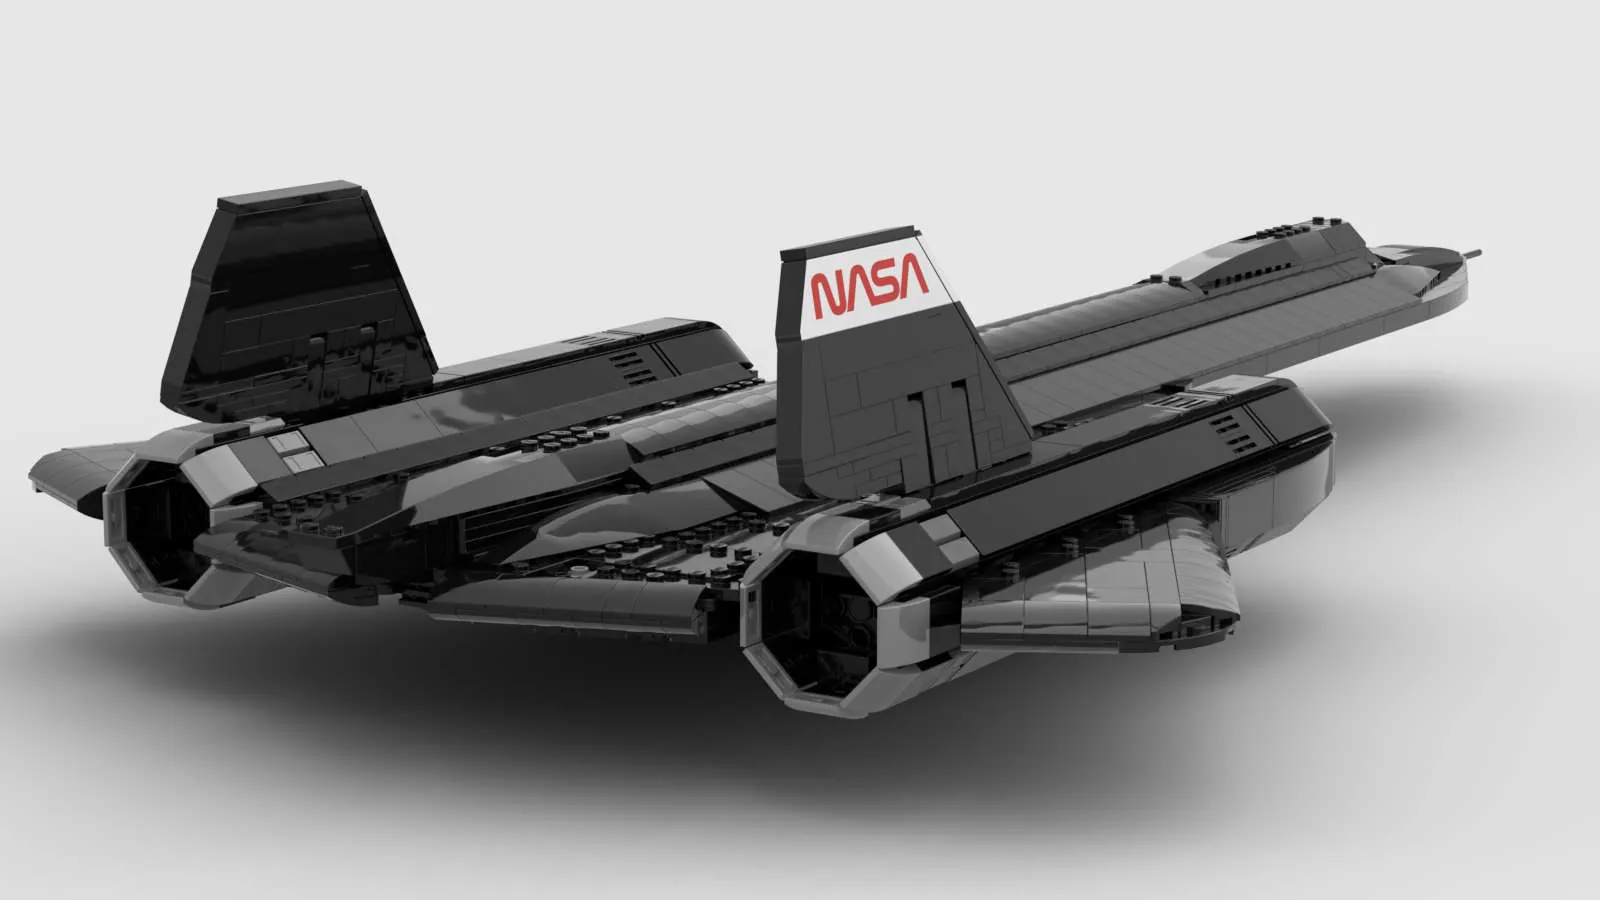 NASA SR 71 BLACKBIRD Achieves 10K Support on LEGO IDEAS